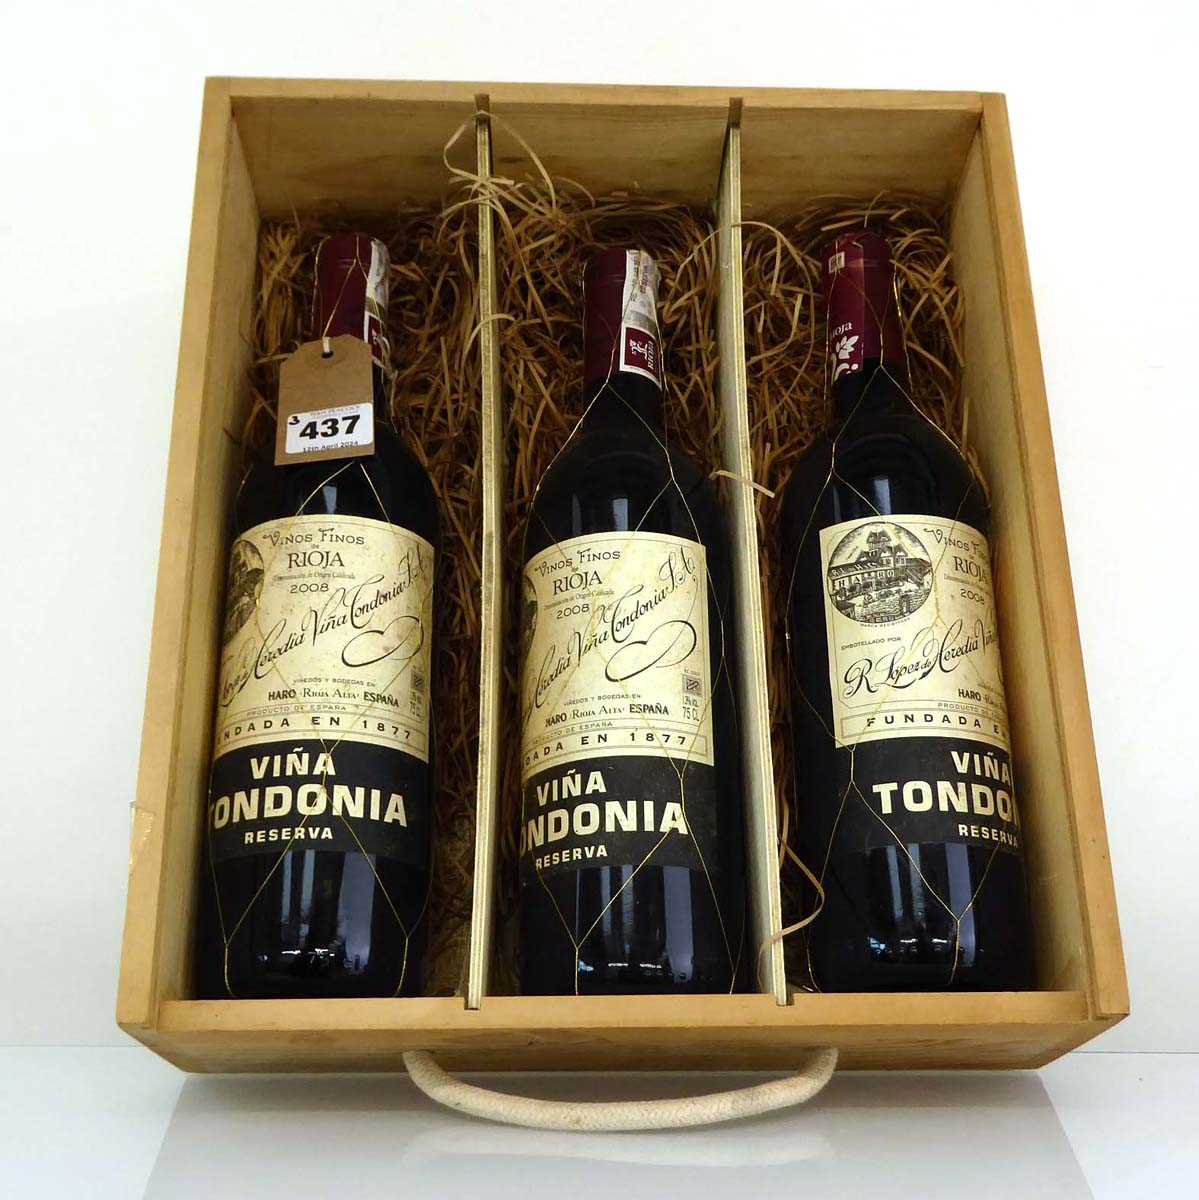 3 bottles of R. Lopez de Heredia Vina Tondonia Reserva 2008 Rioja DOCa, Spain with wooden box